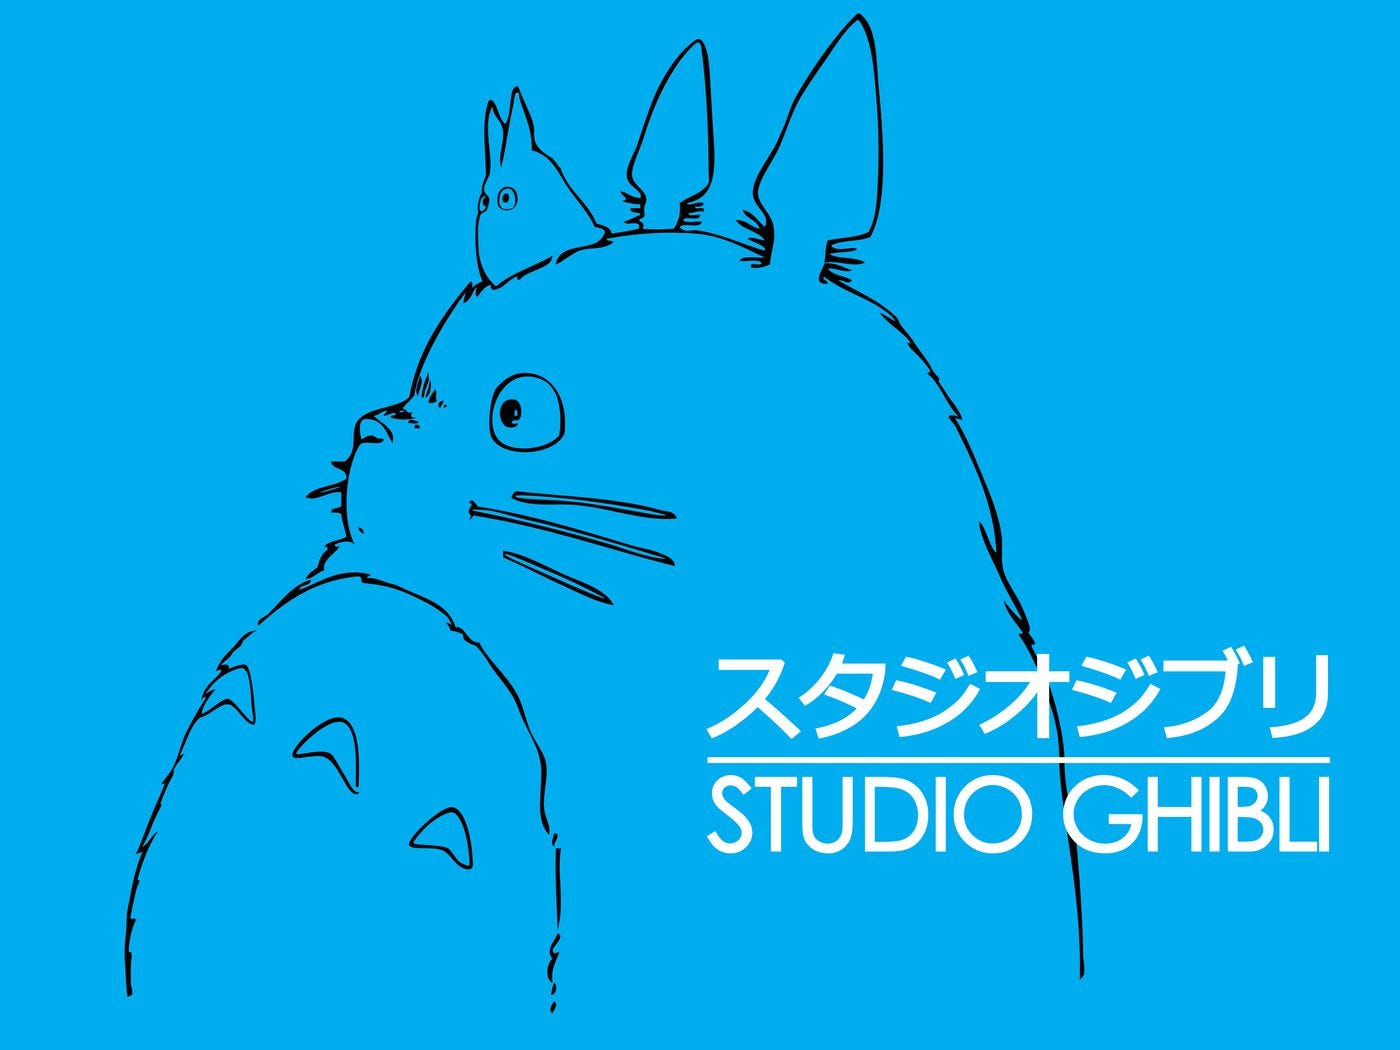 Studio Ghibli: My Escape from Reality | by Catherine Putnam | Medium